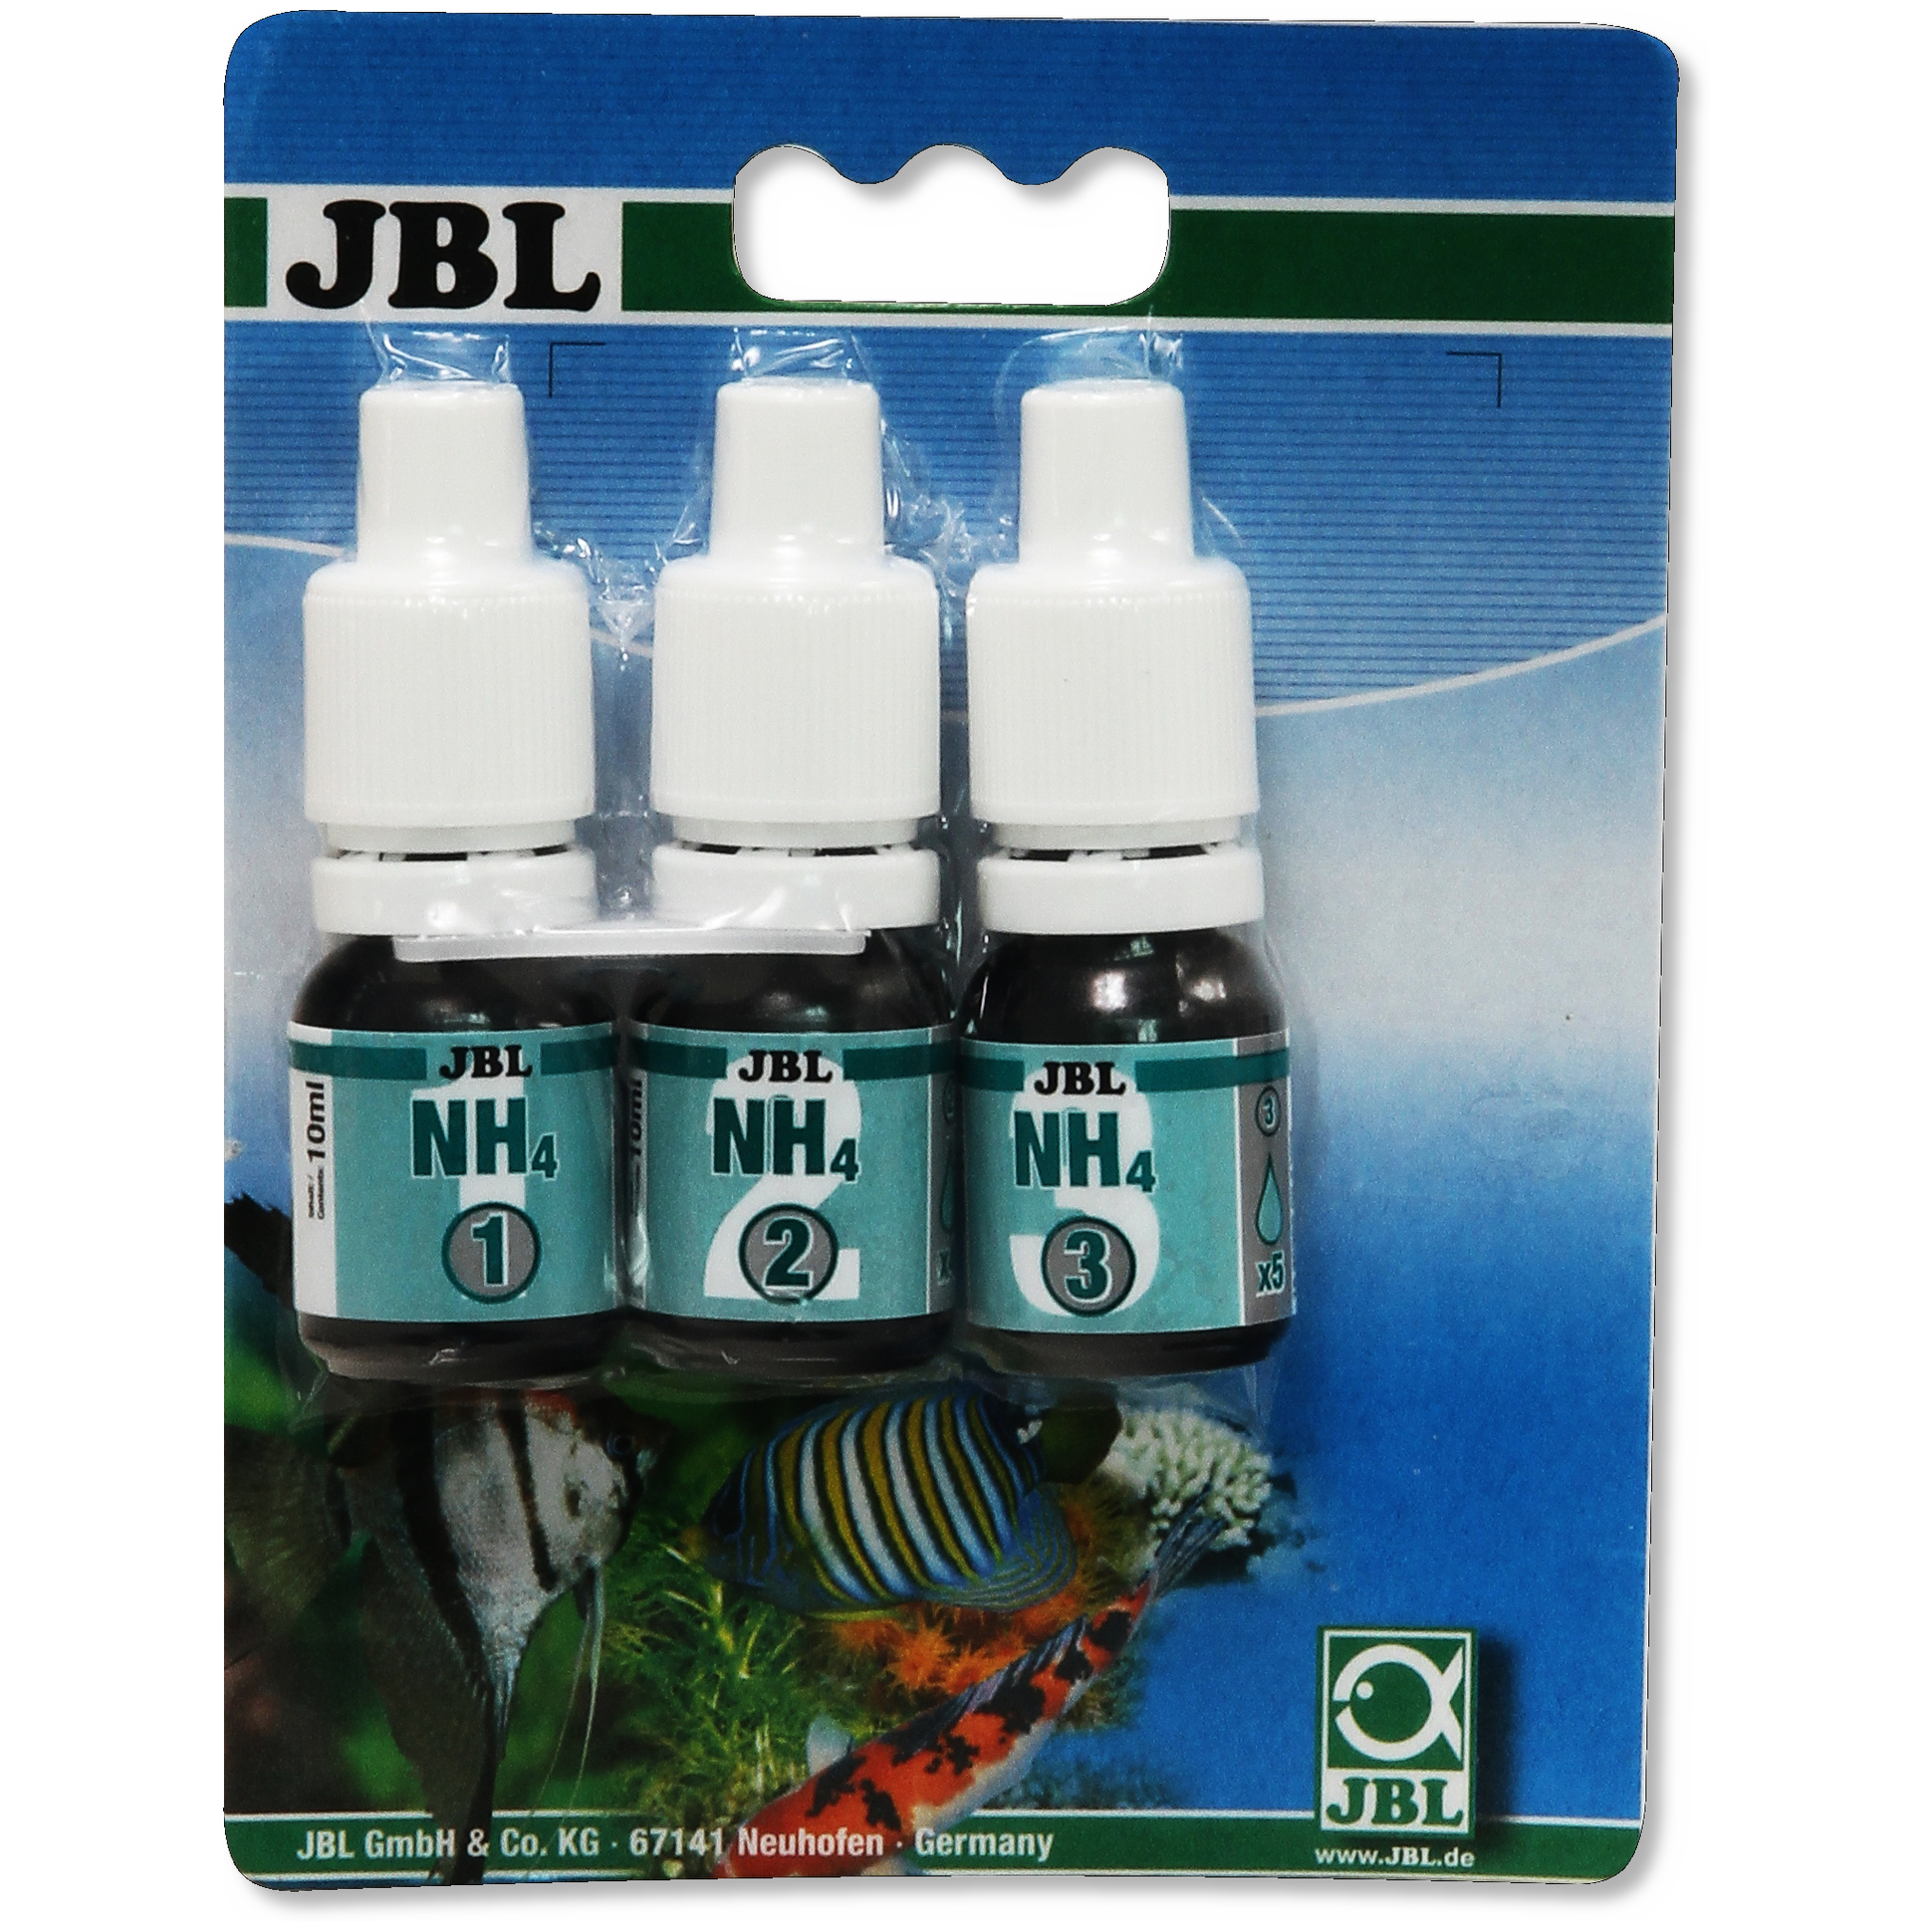 JBL NH4 Ammonium Test